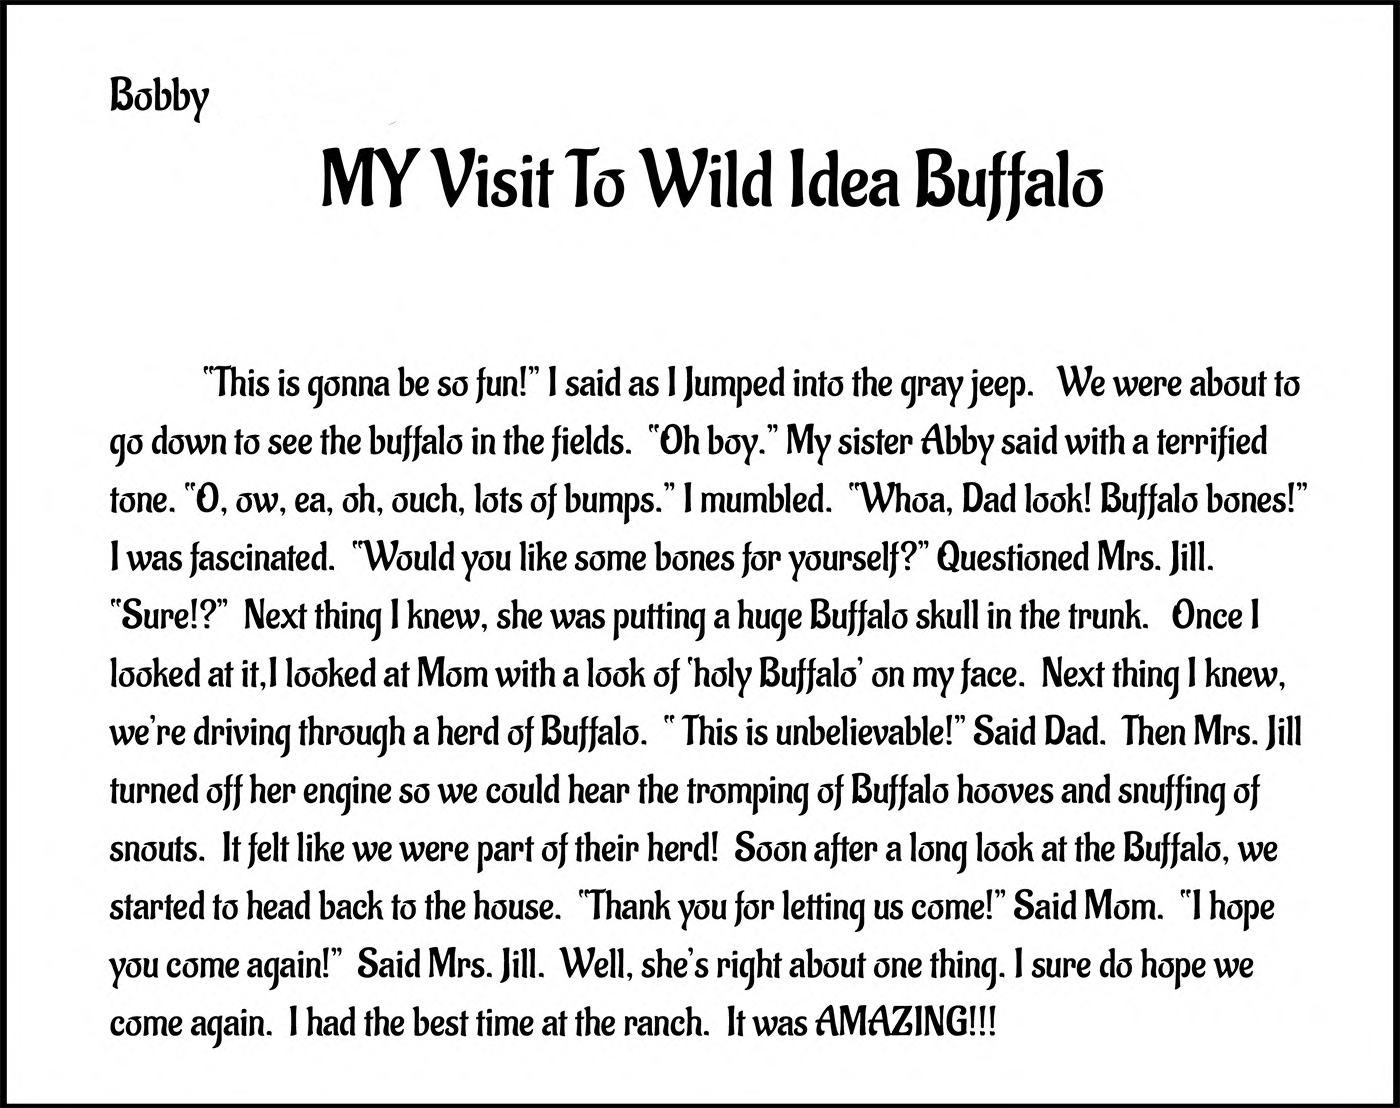 Letter to Wild IDea Buffalo Company